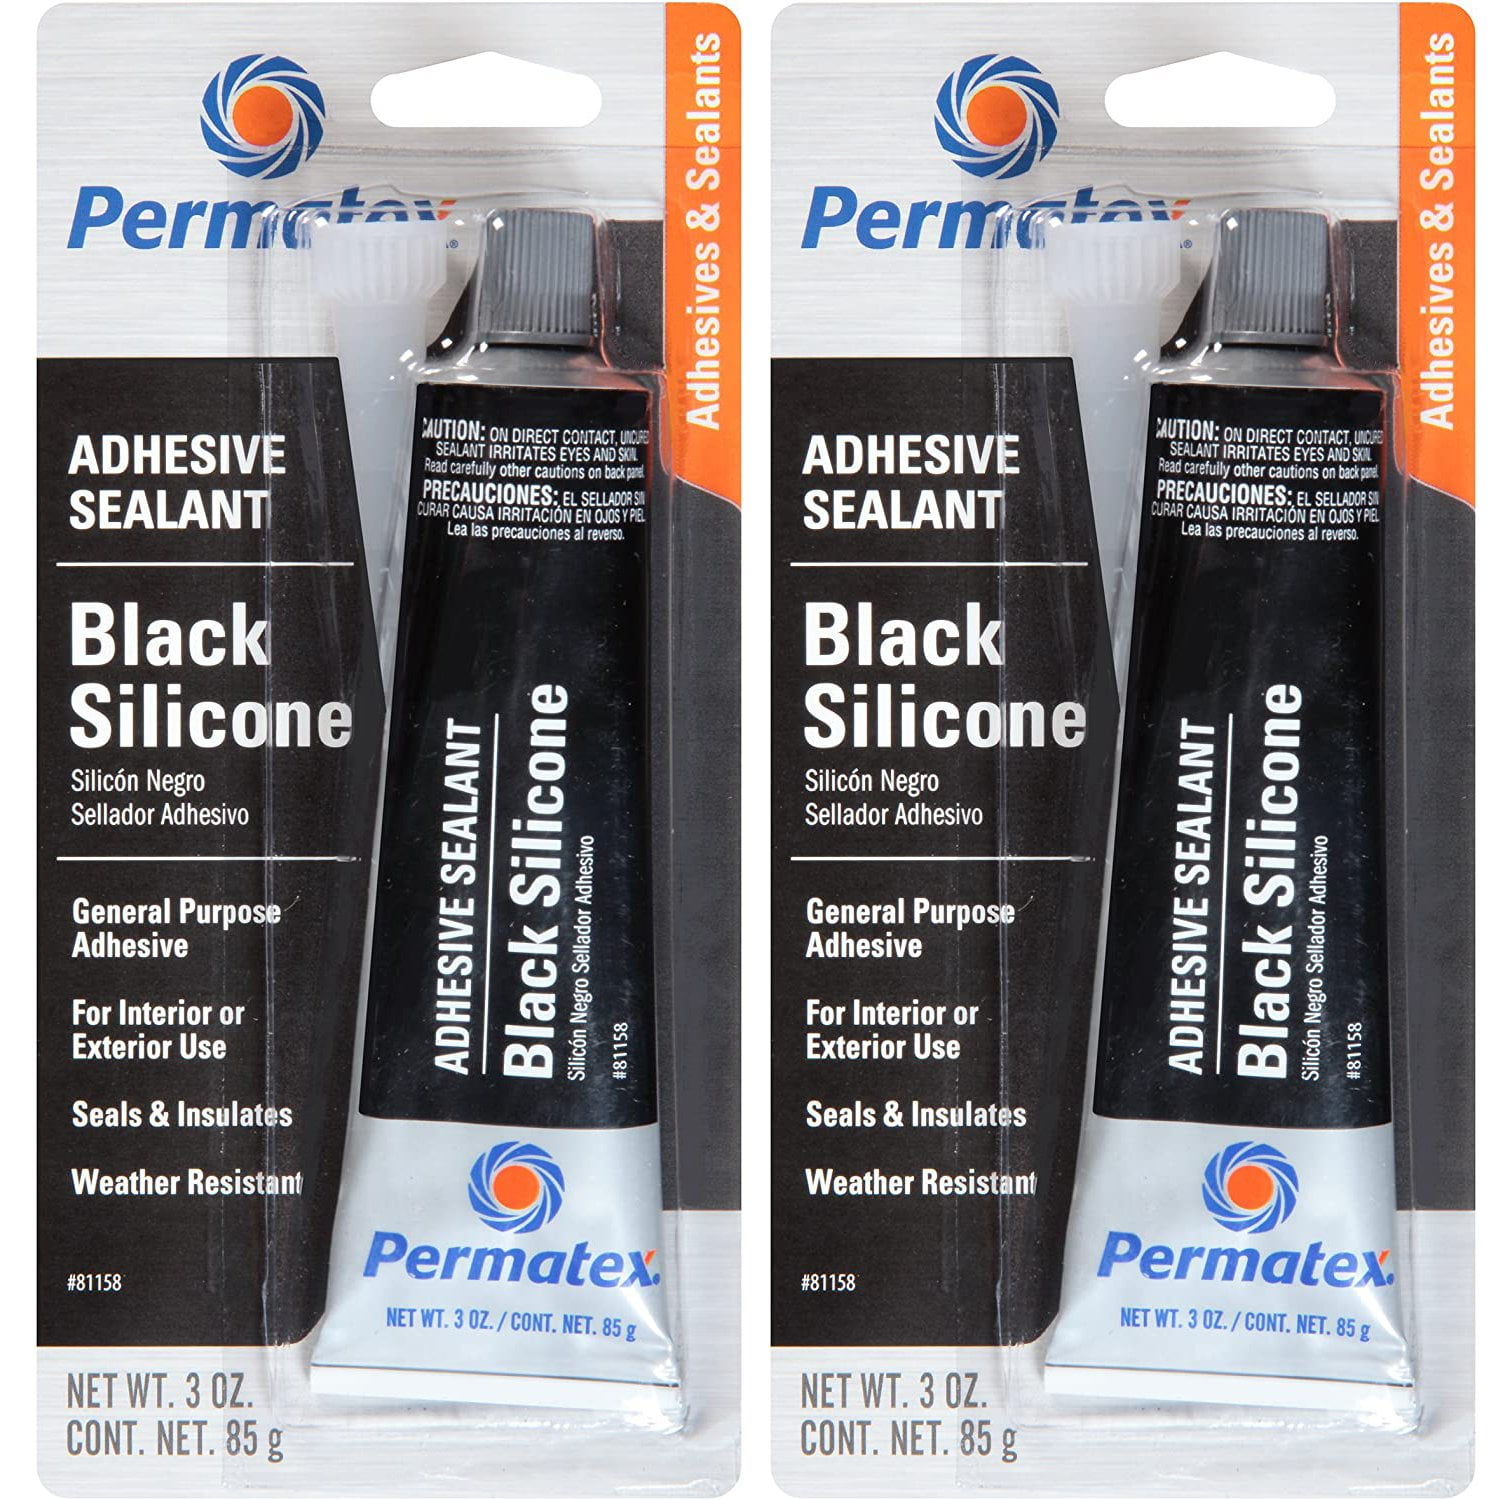 Permatex 81158 Silicone Adhesive Sealant, Black - 3 fl oz tube